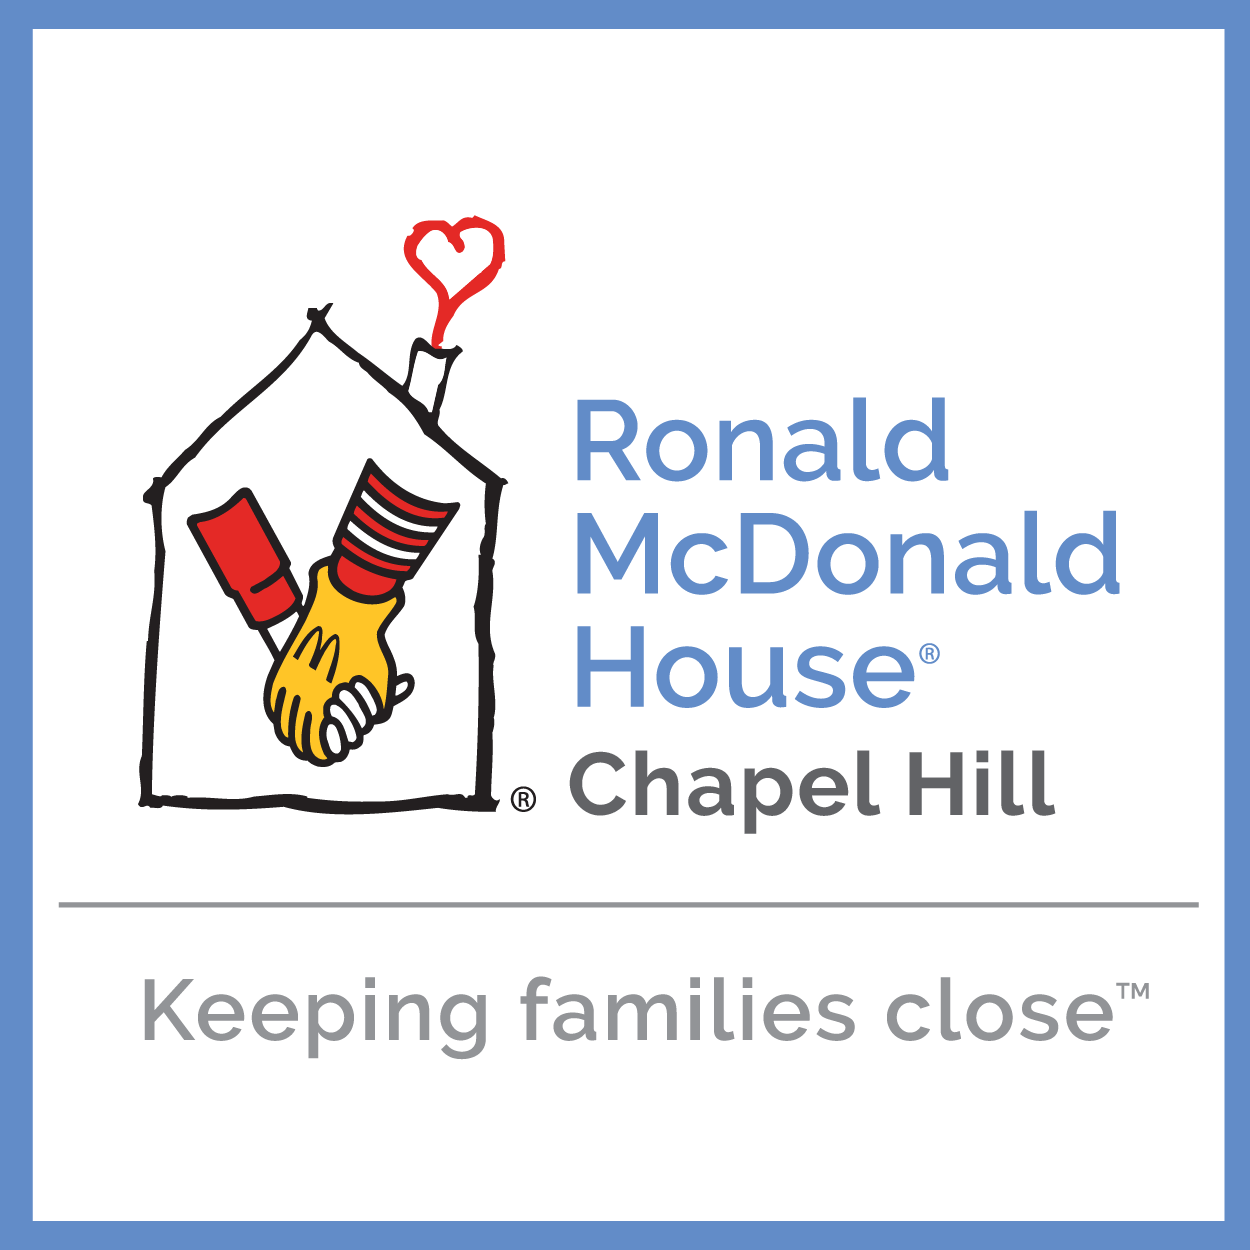 certapro chapel hill sponsor ronald mcdonald house